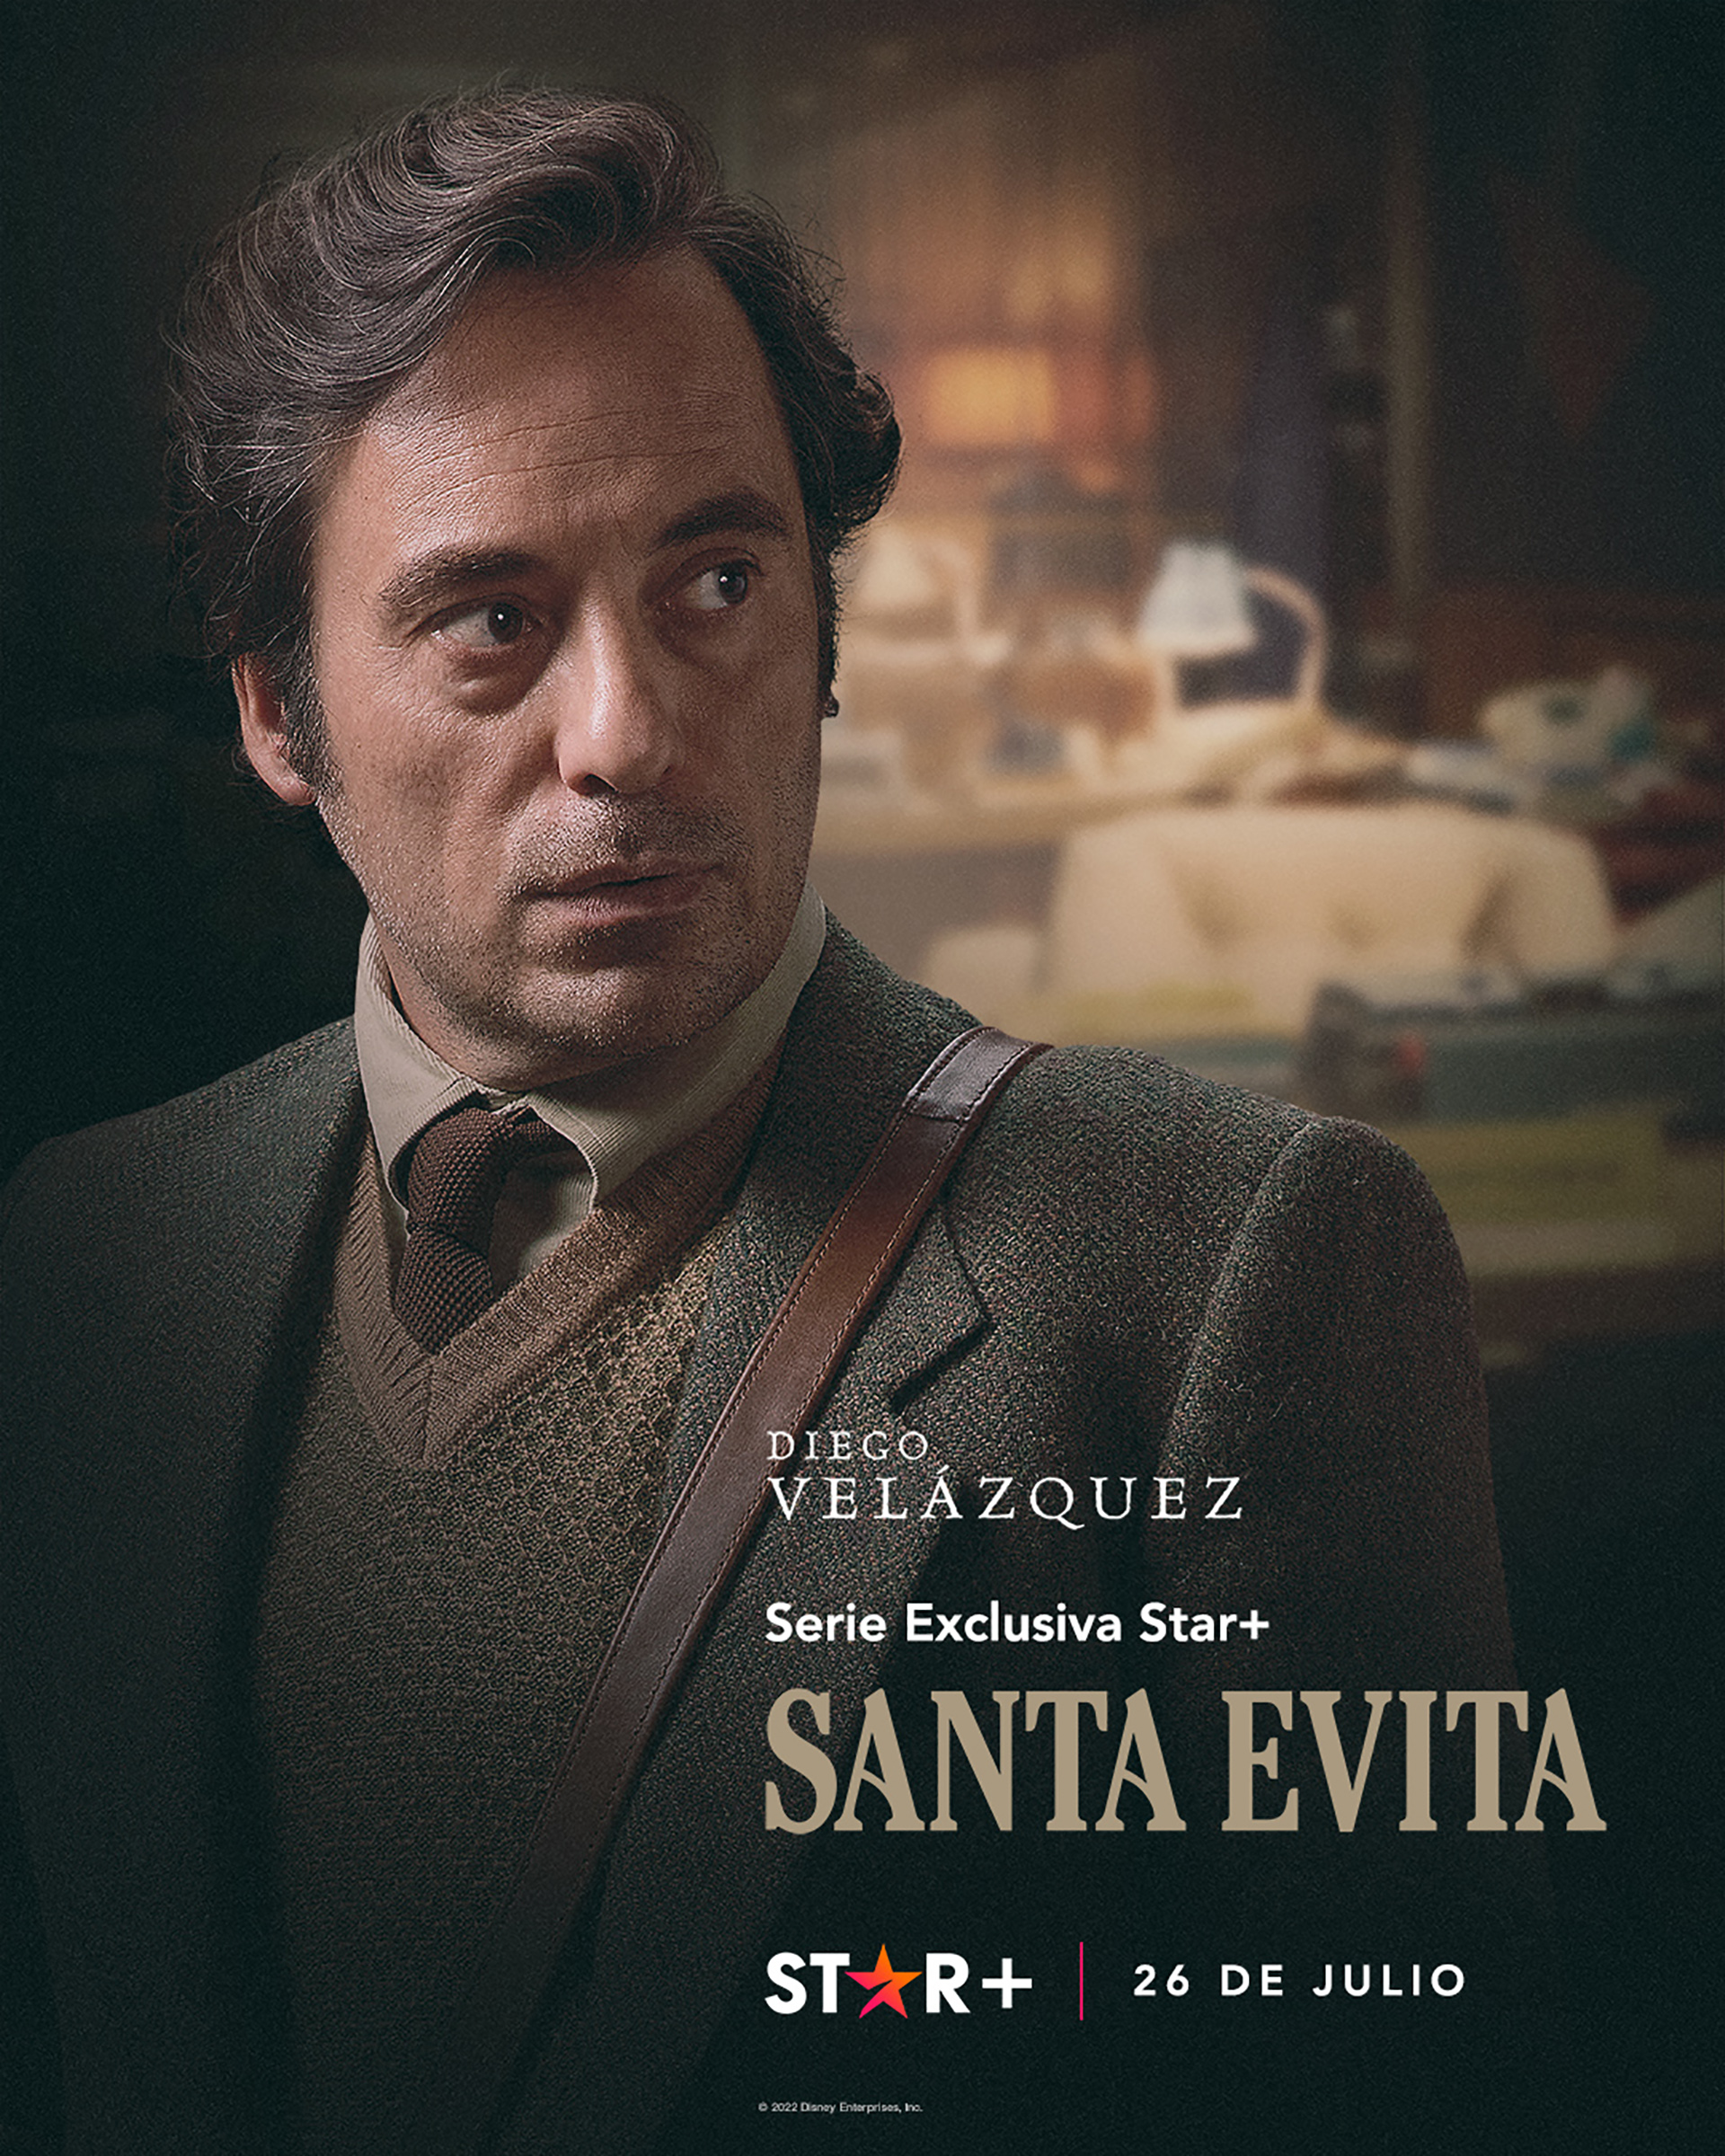 Diego Velásquez se suma a "Santa Evita" que llega a la plataforma el 26 de julio. (Star Plus)